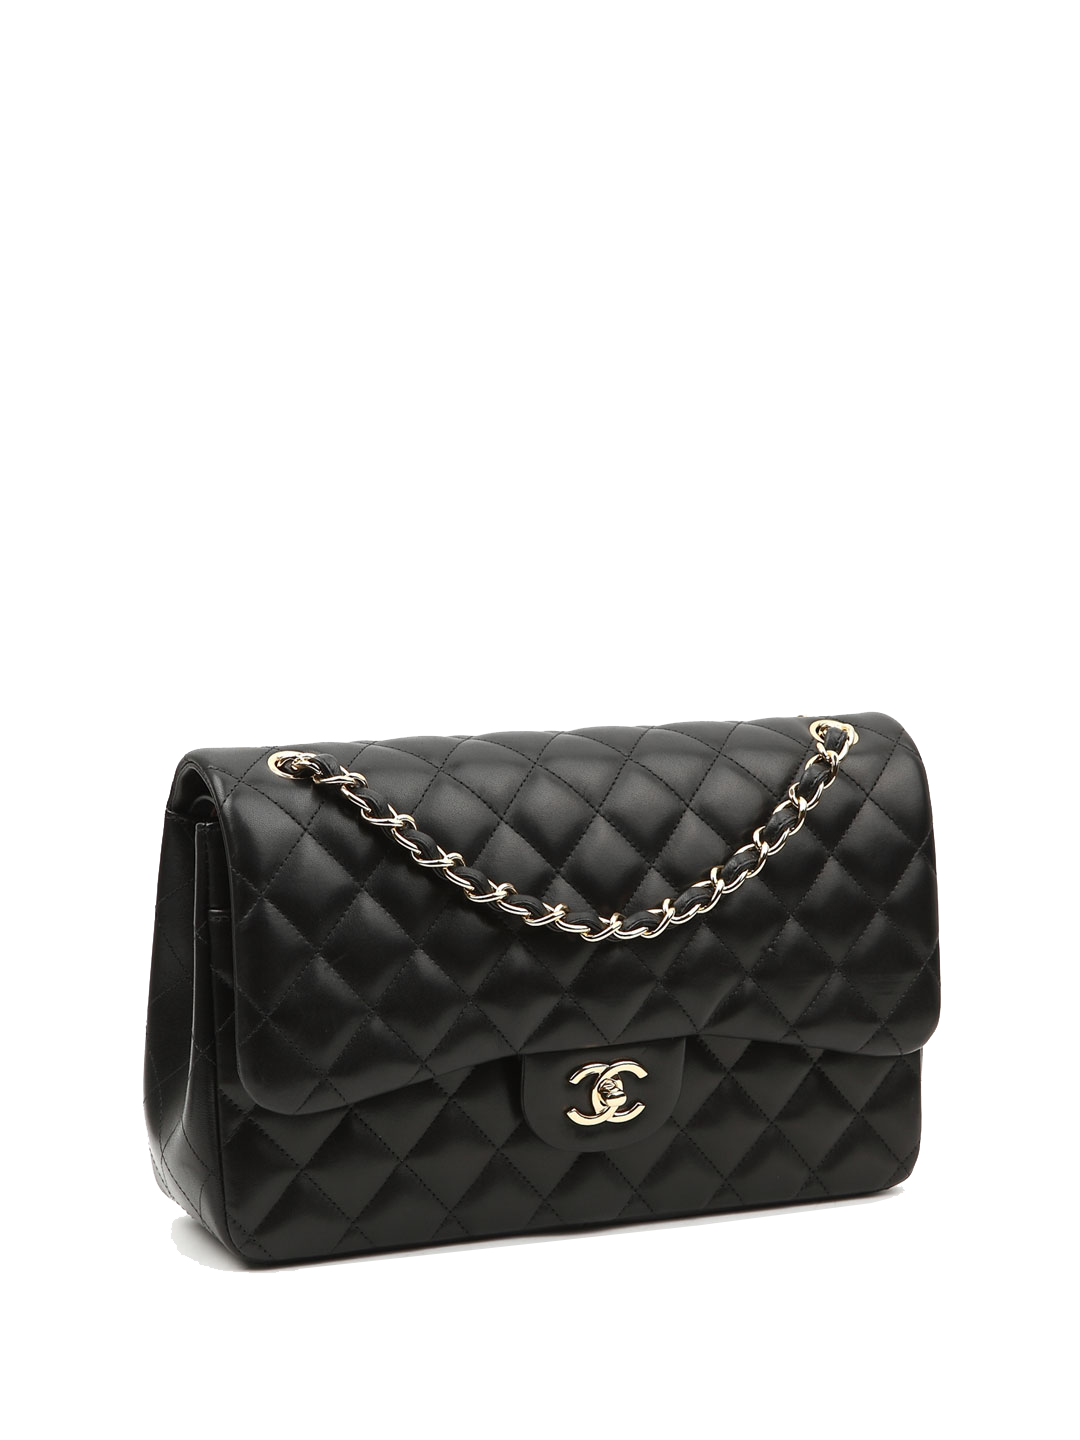 Week Fashion 2.55 Paris Bag Handbag Lingge Clipart